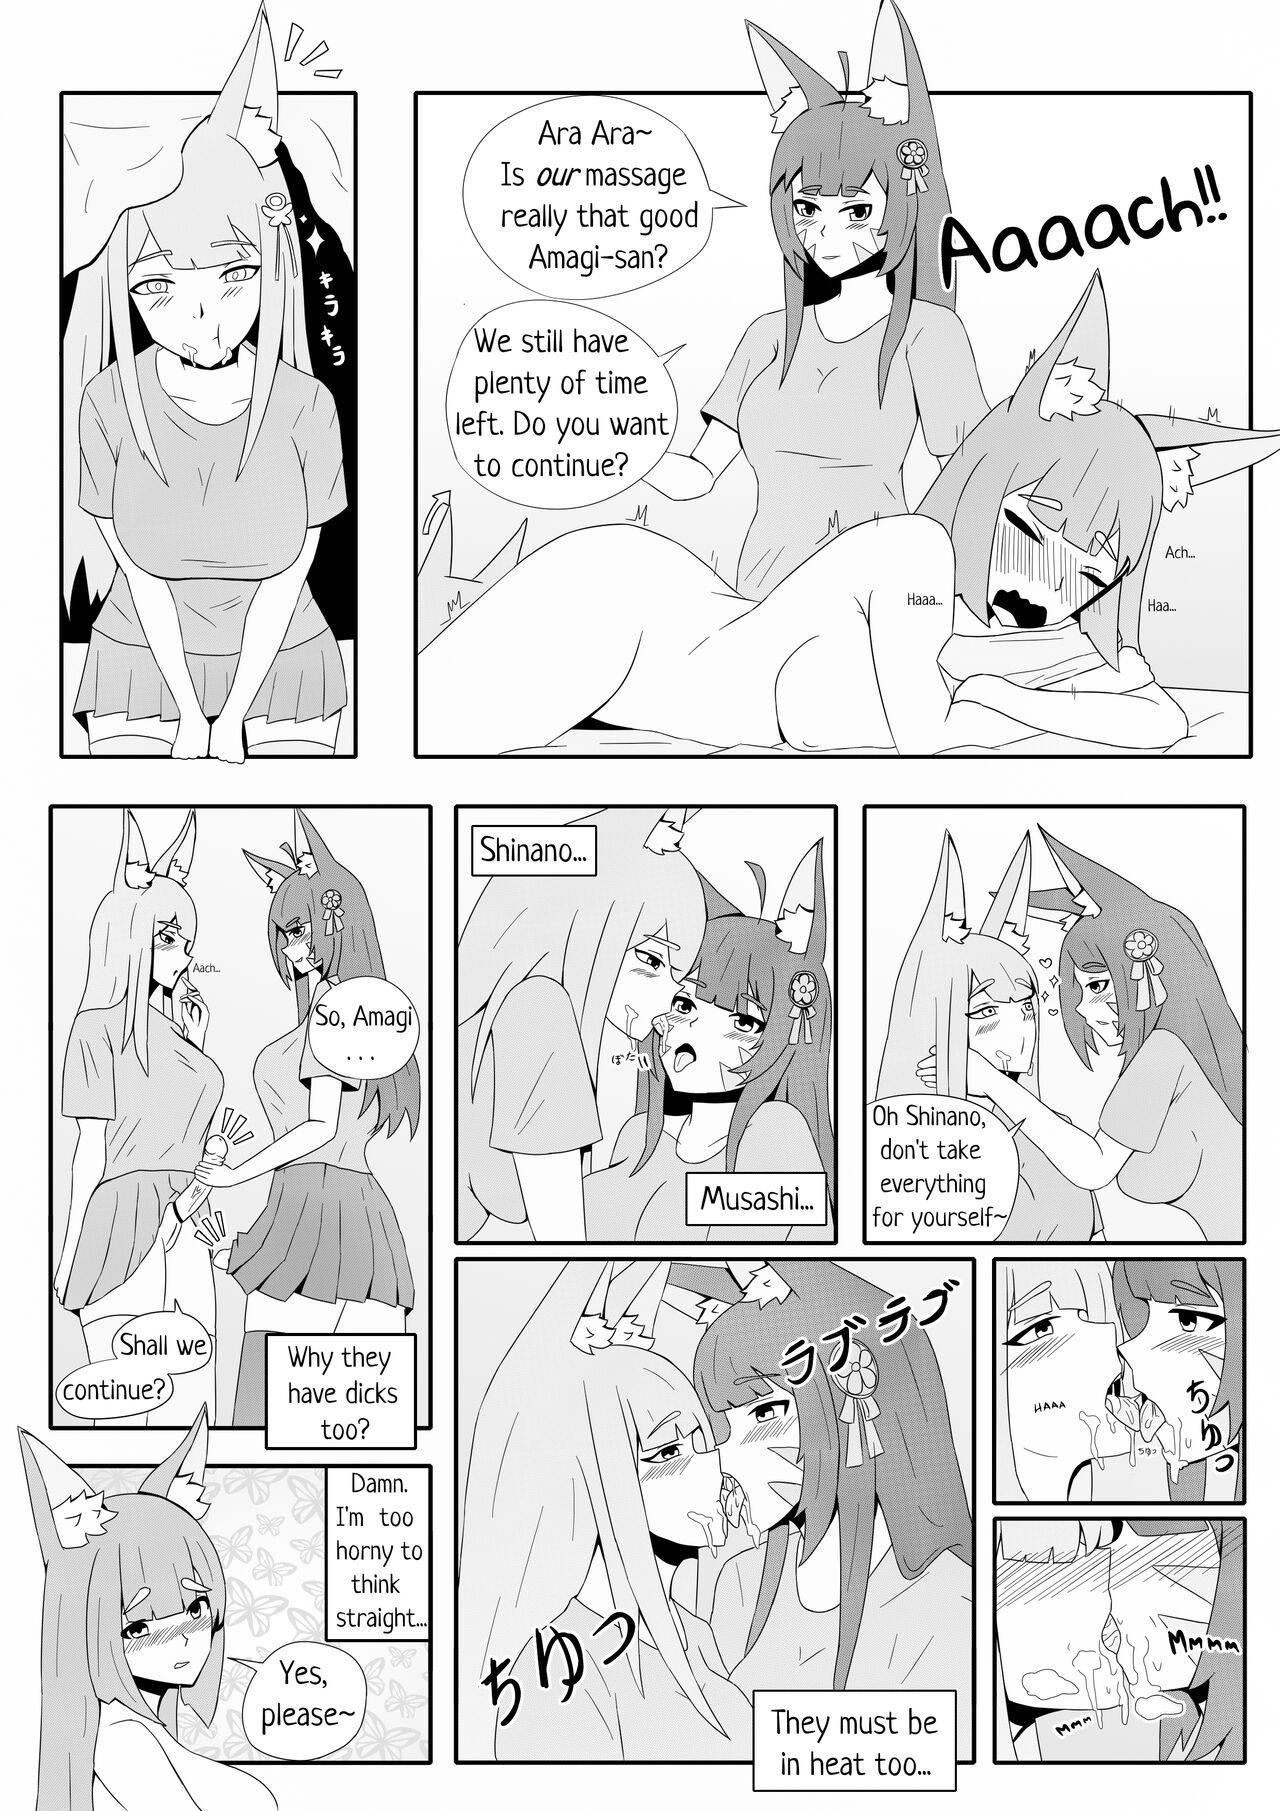 Amagi's very special massage 8